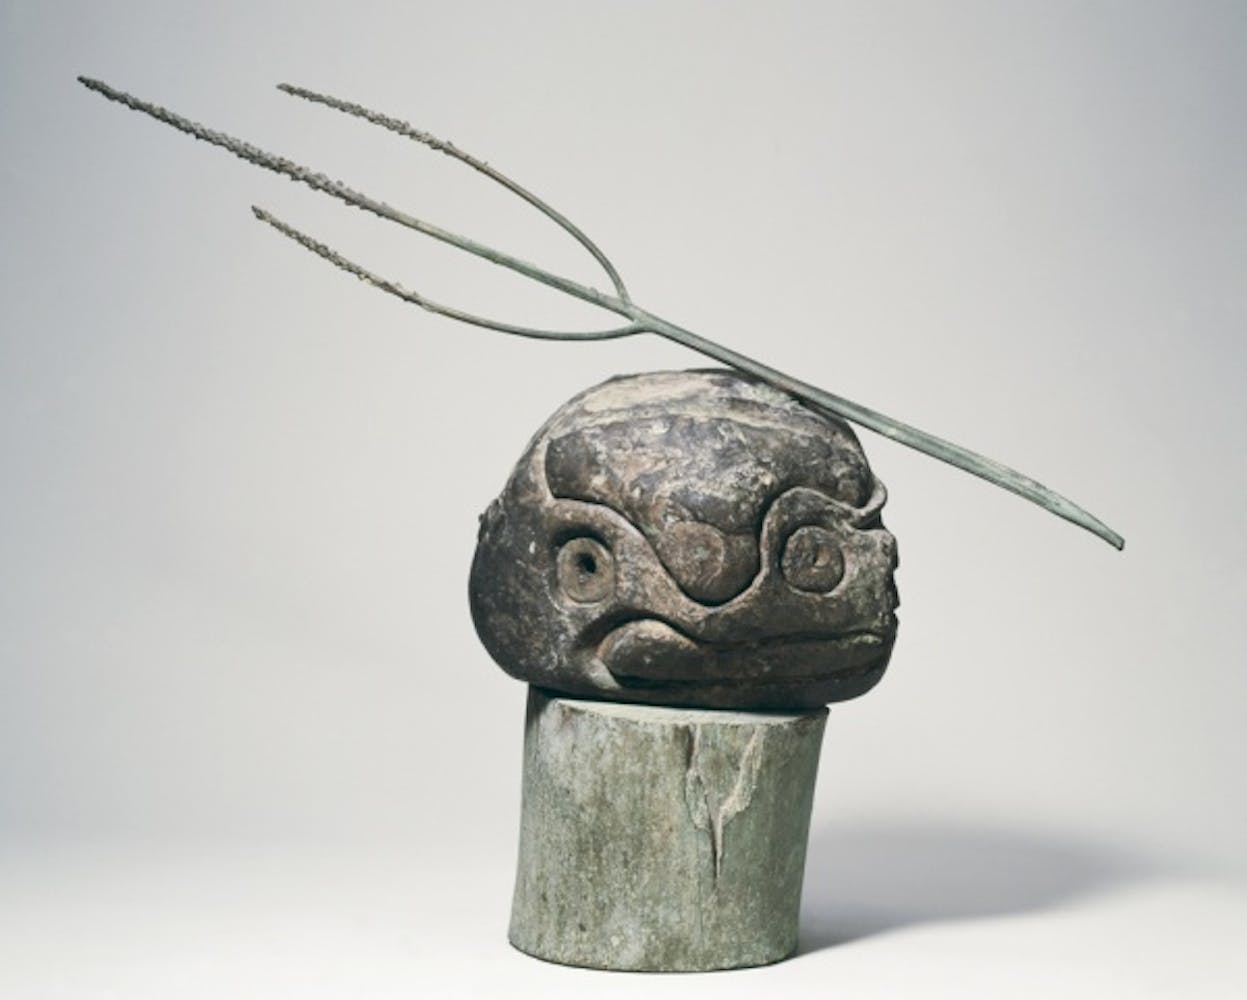 Joan Miró, Tete et Oiseau (Head and Bird), 1967